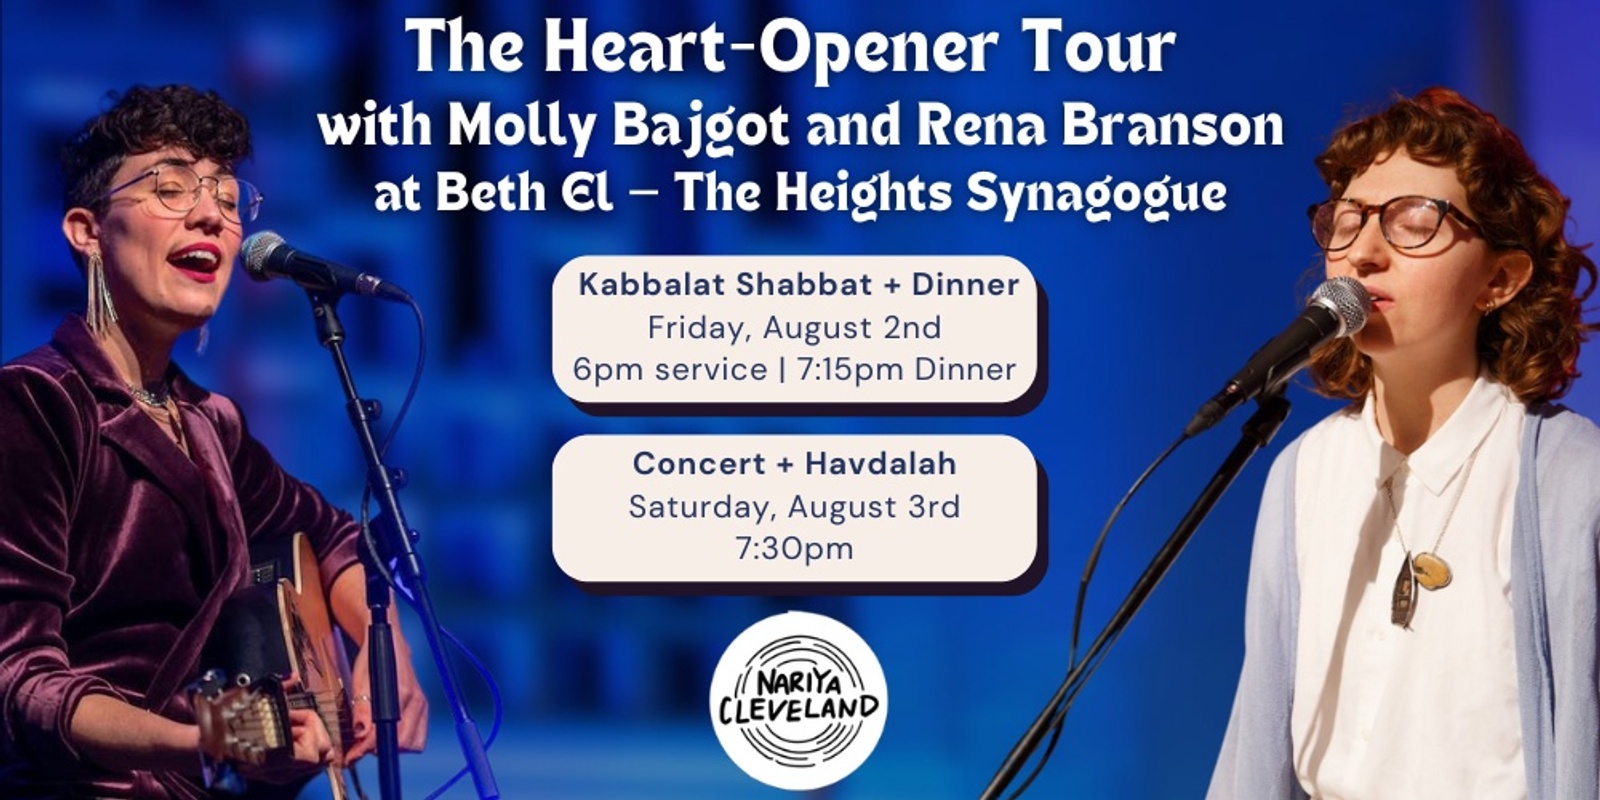 Banner image for August Nariya Cleveland Musical Shabbat